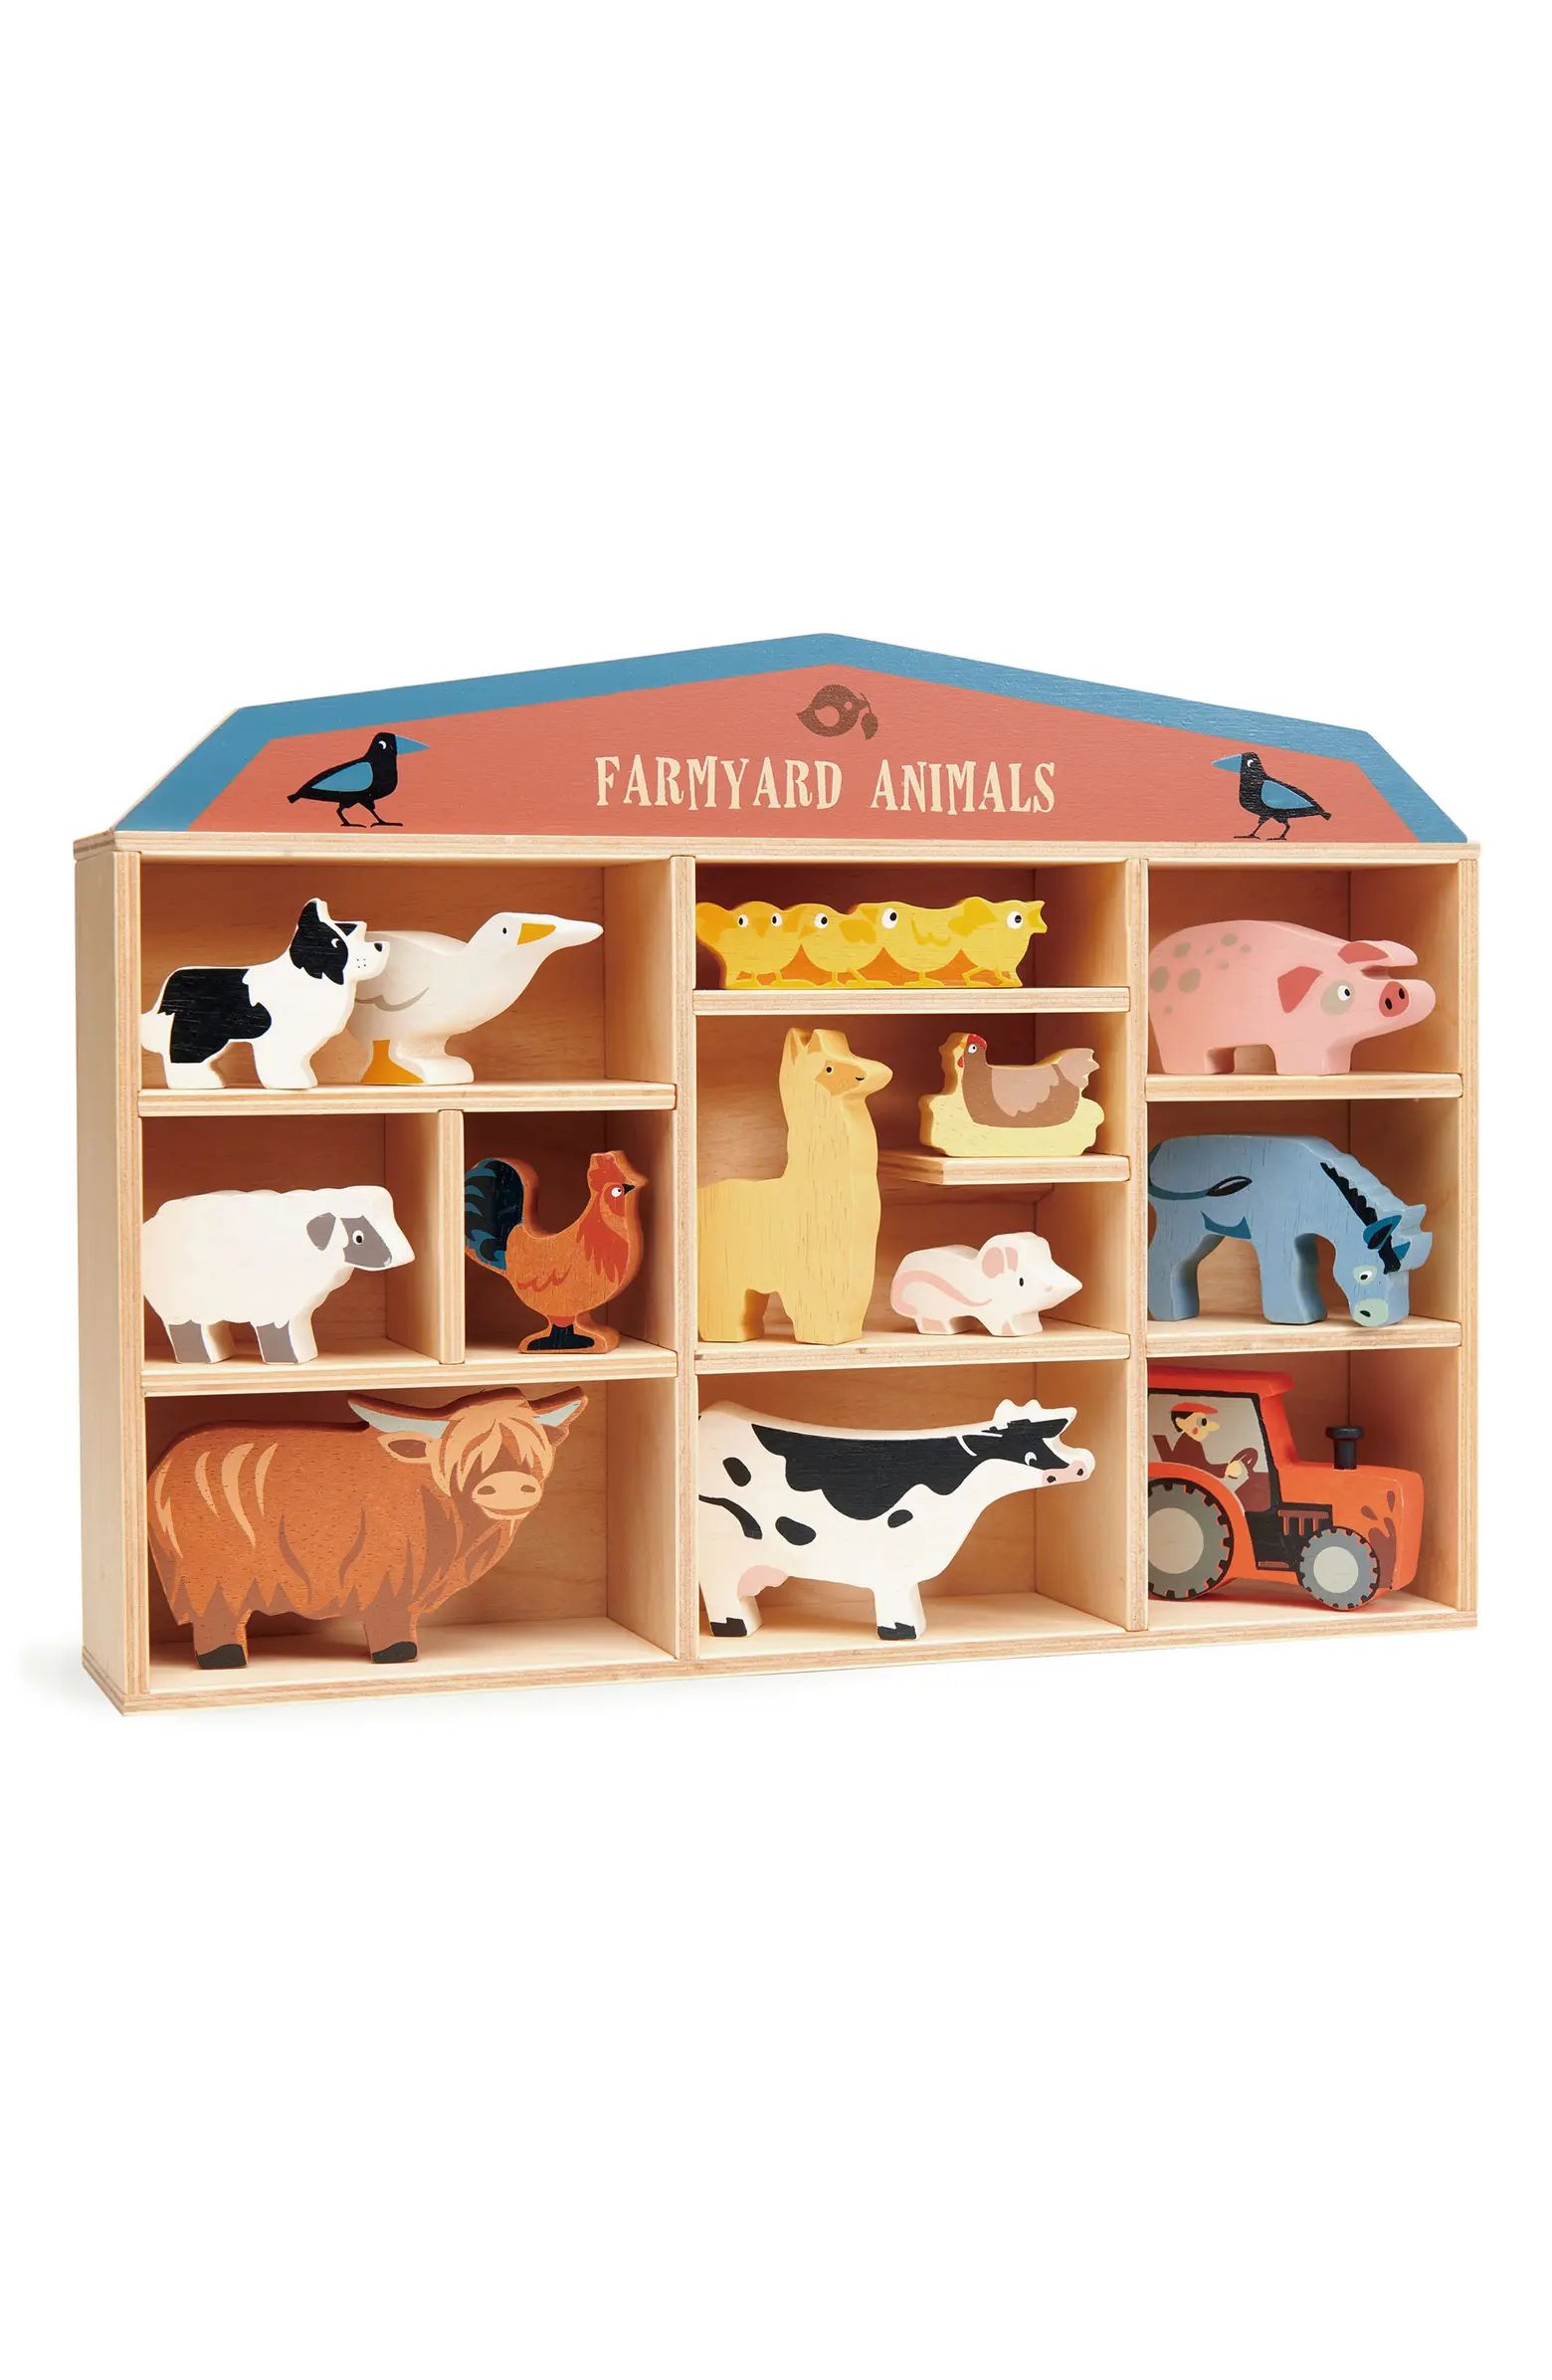 Tender Leaf Toys Farmyard Animals Wooden Playset | Nordstrom | Nordstrom